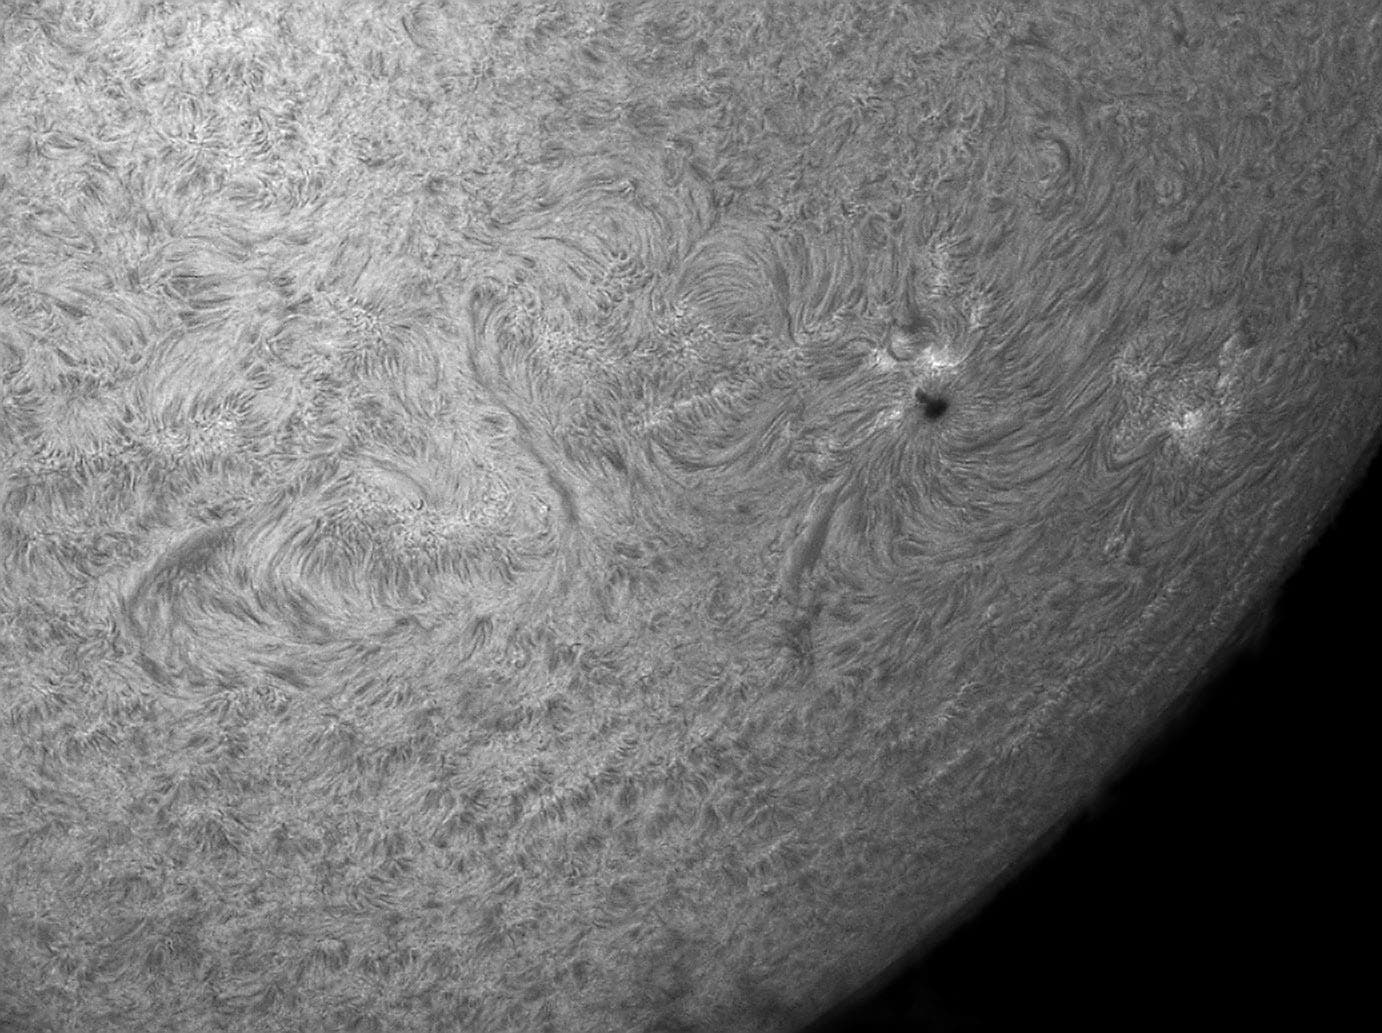 H-alpha-Sonne am 2.4.2012